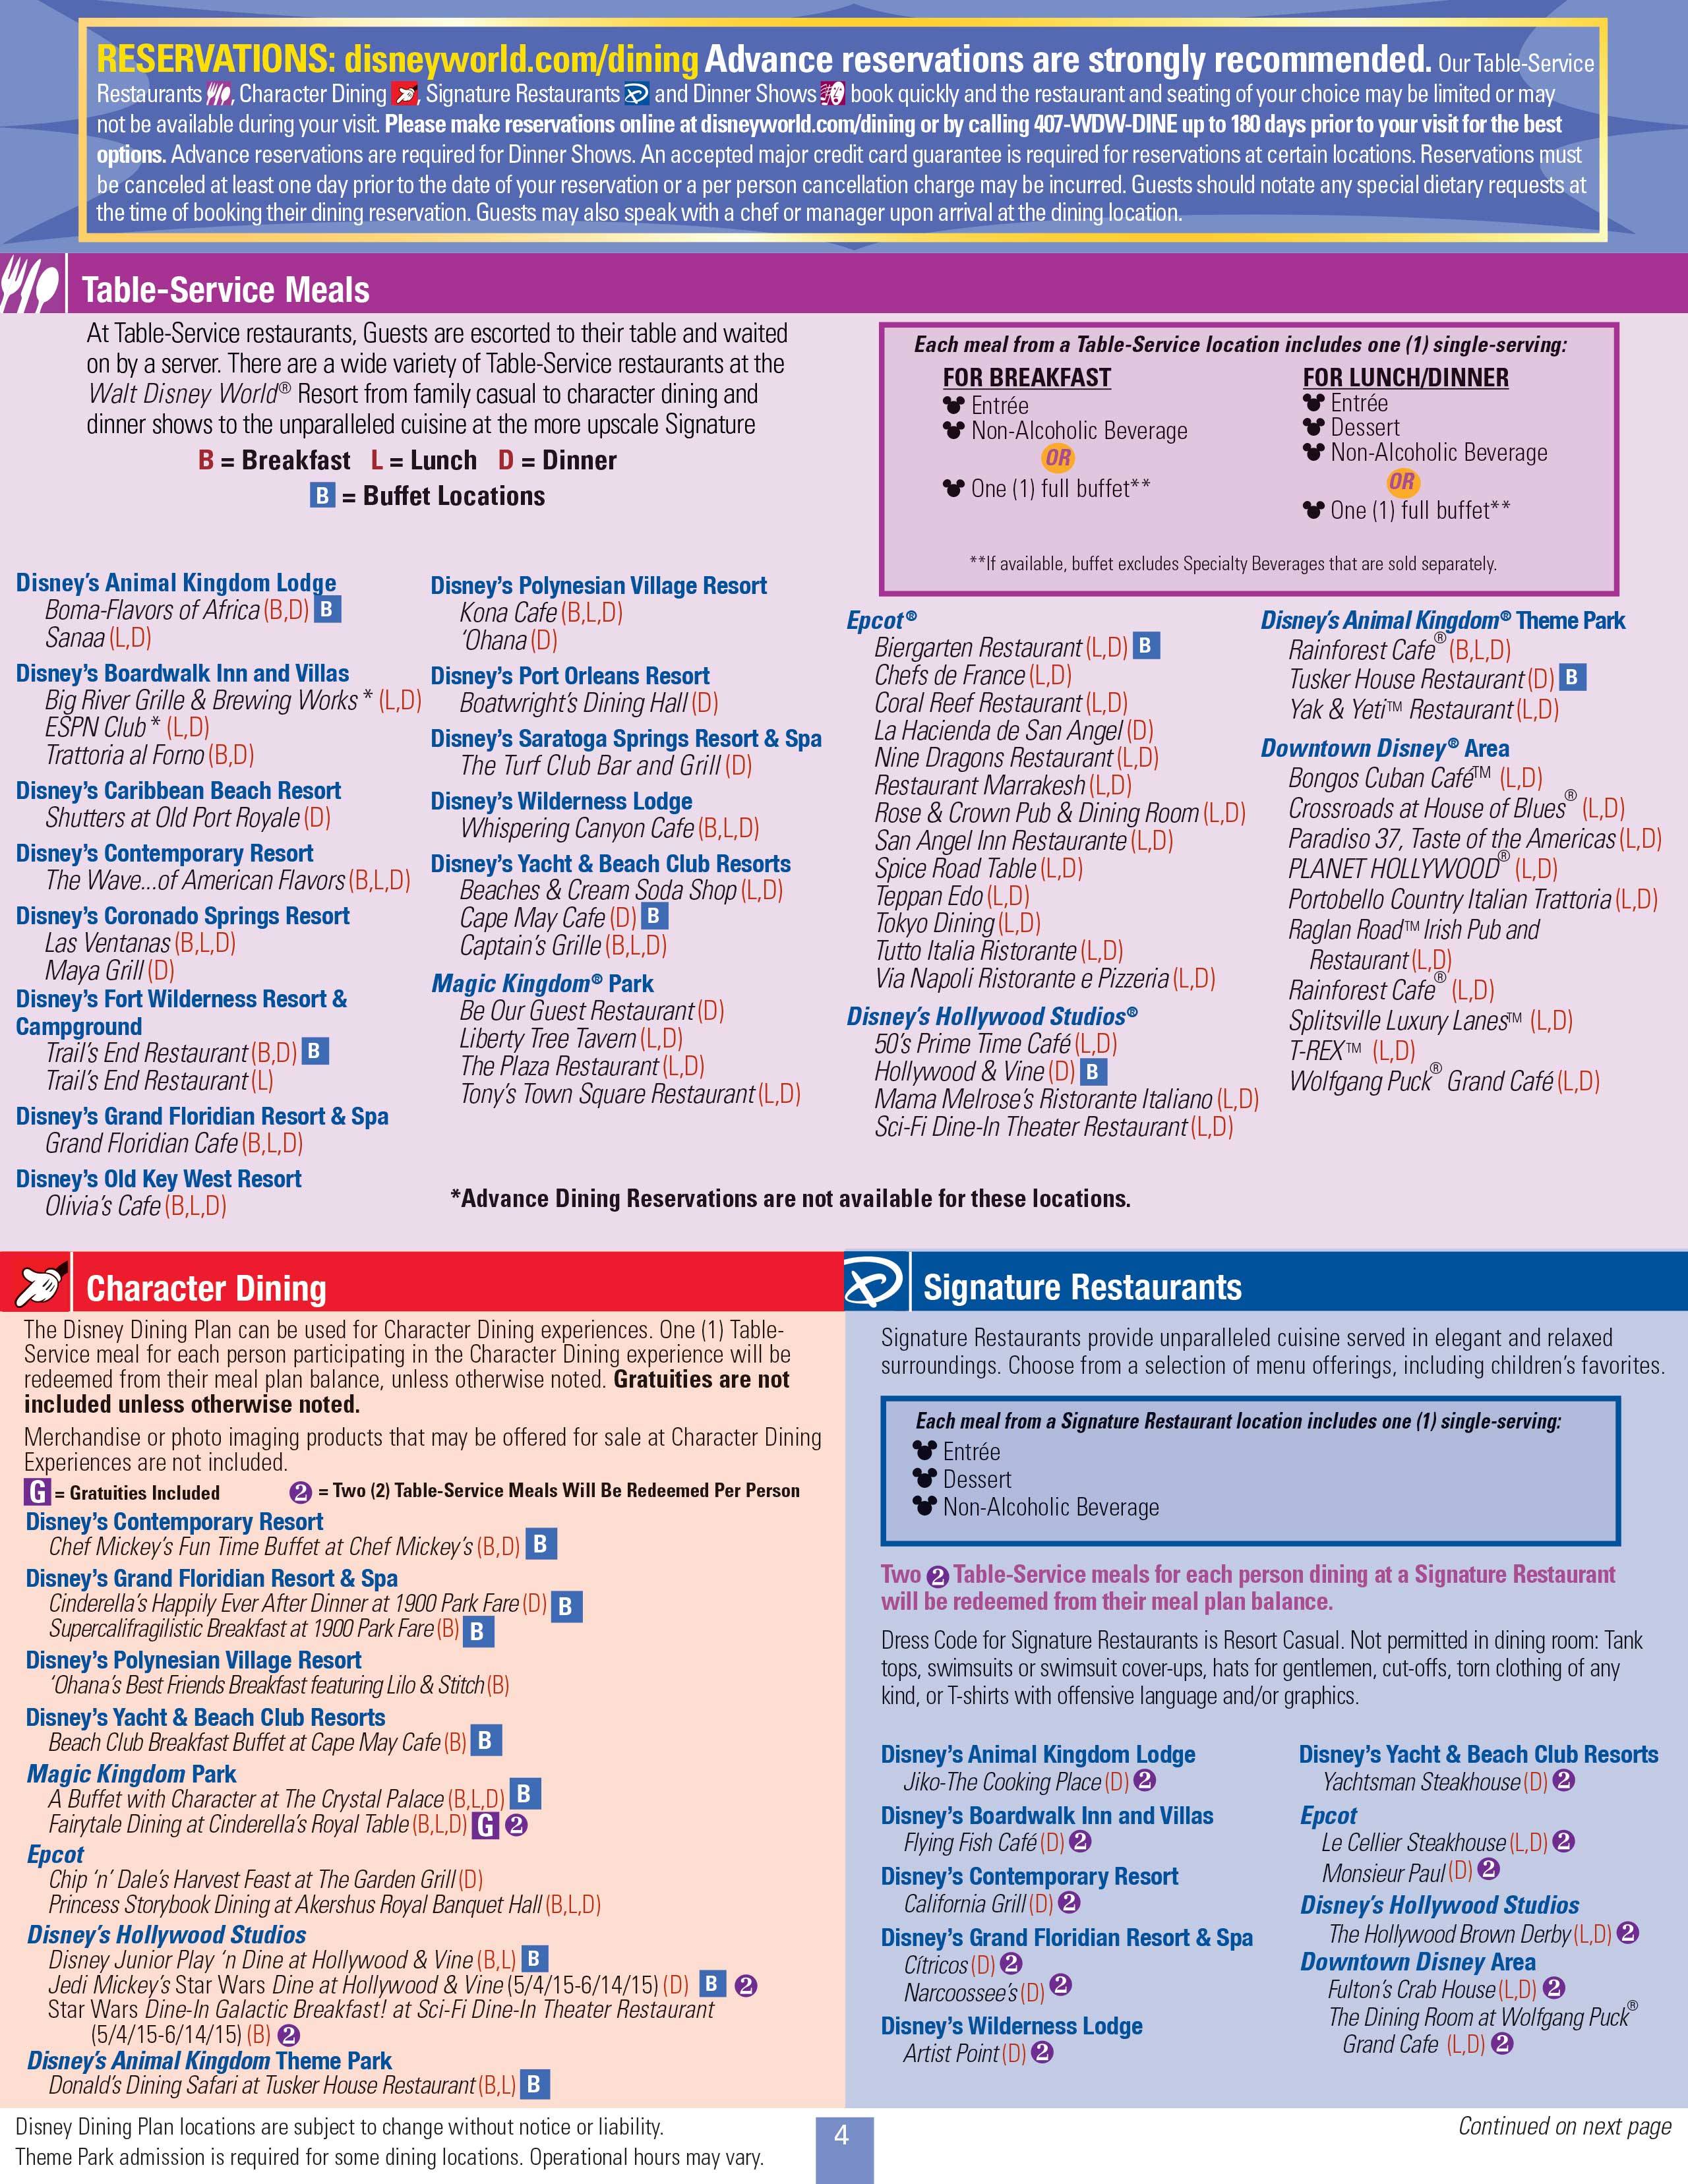 2015 Disney Dining Plan brochures